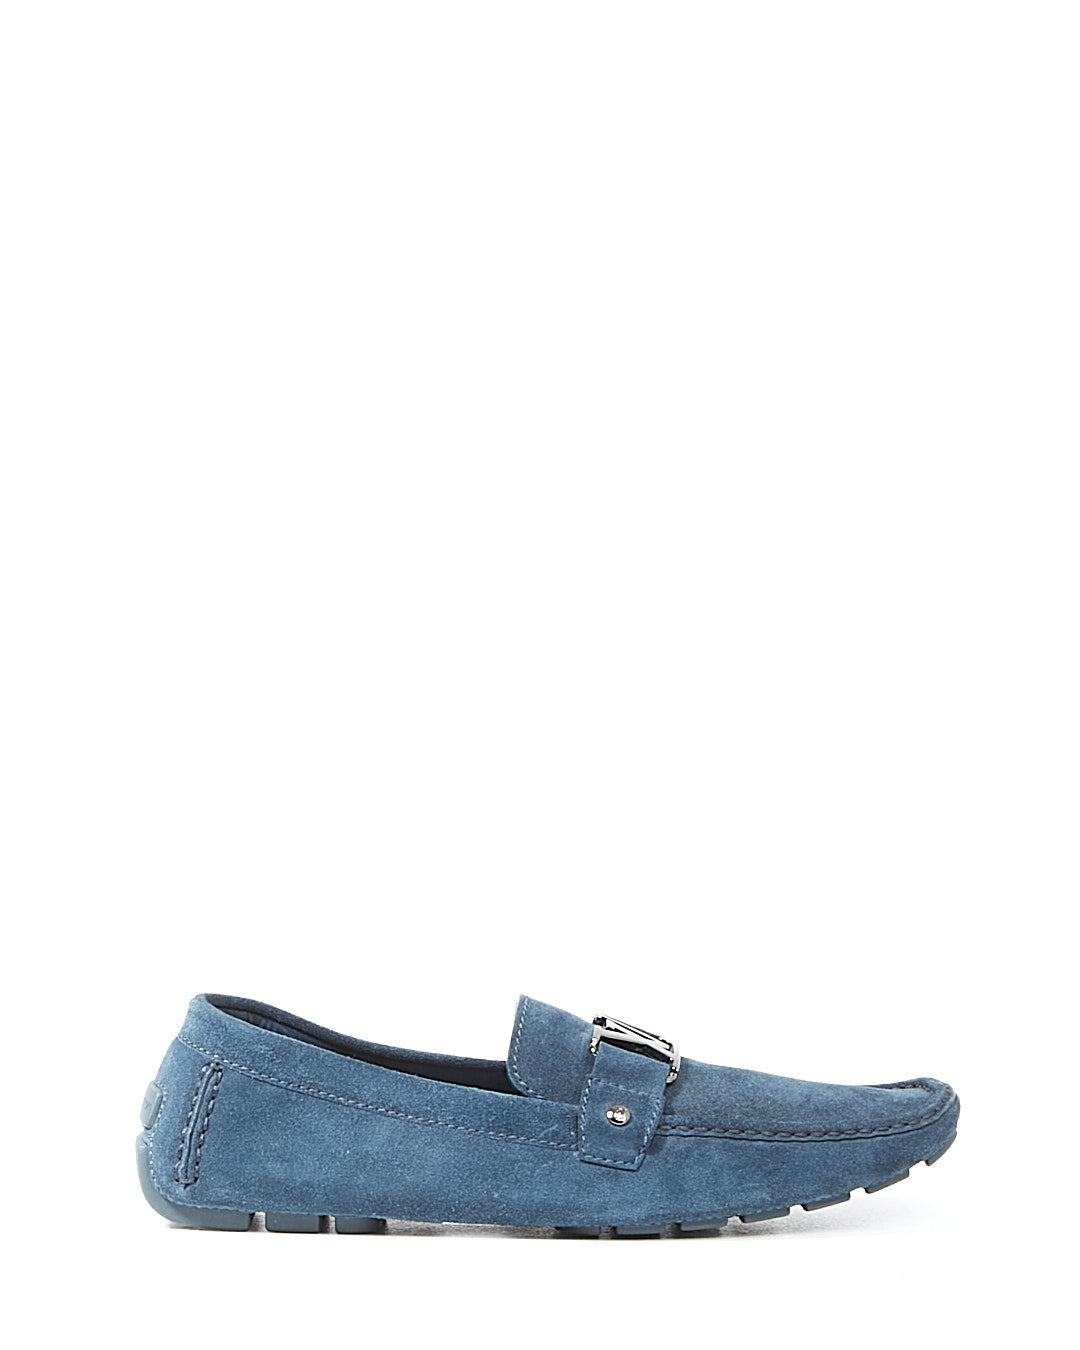 Louis Vuitton Blue Suede LV Logo Loafers - 12